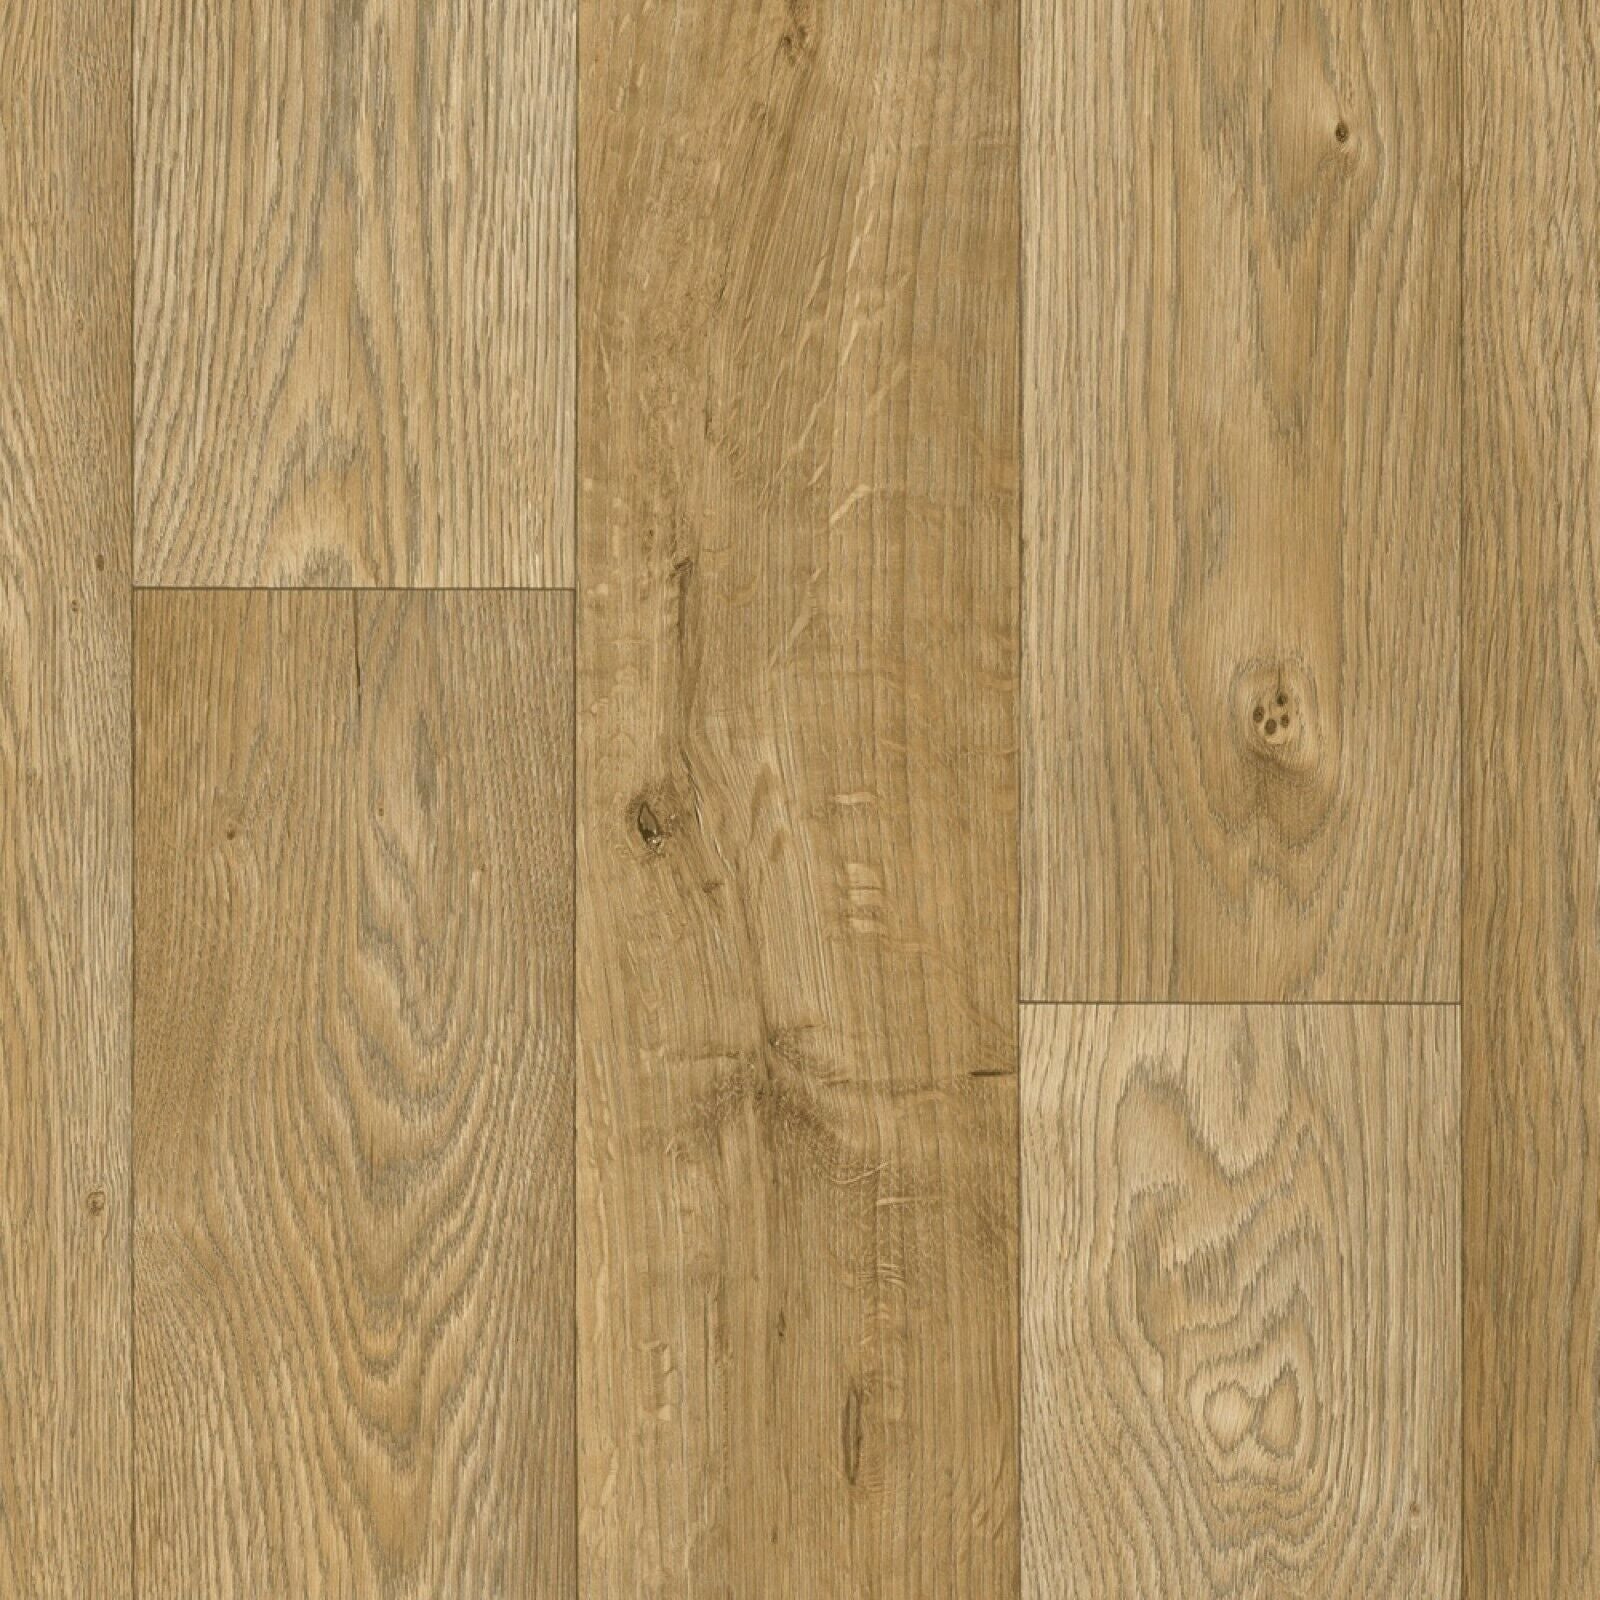 Oak Country Wood Plank Style Primo Vinyl Flooring